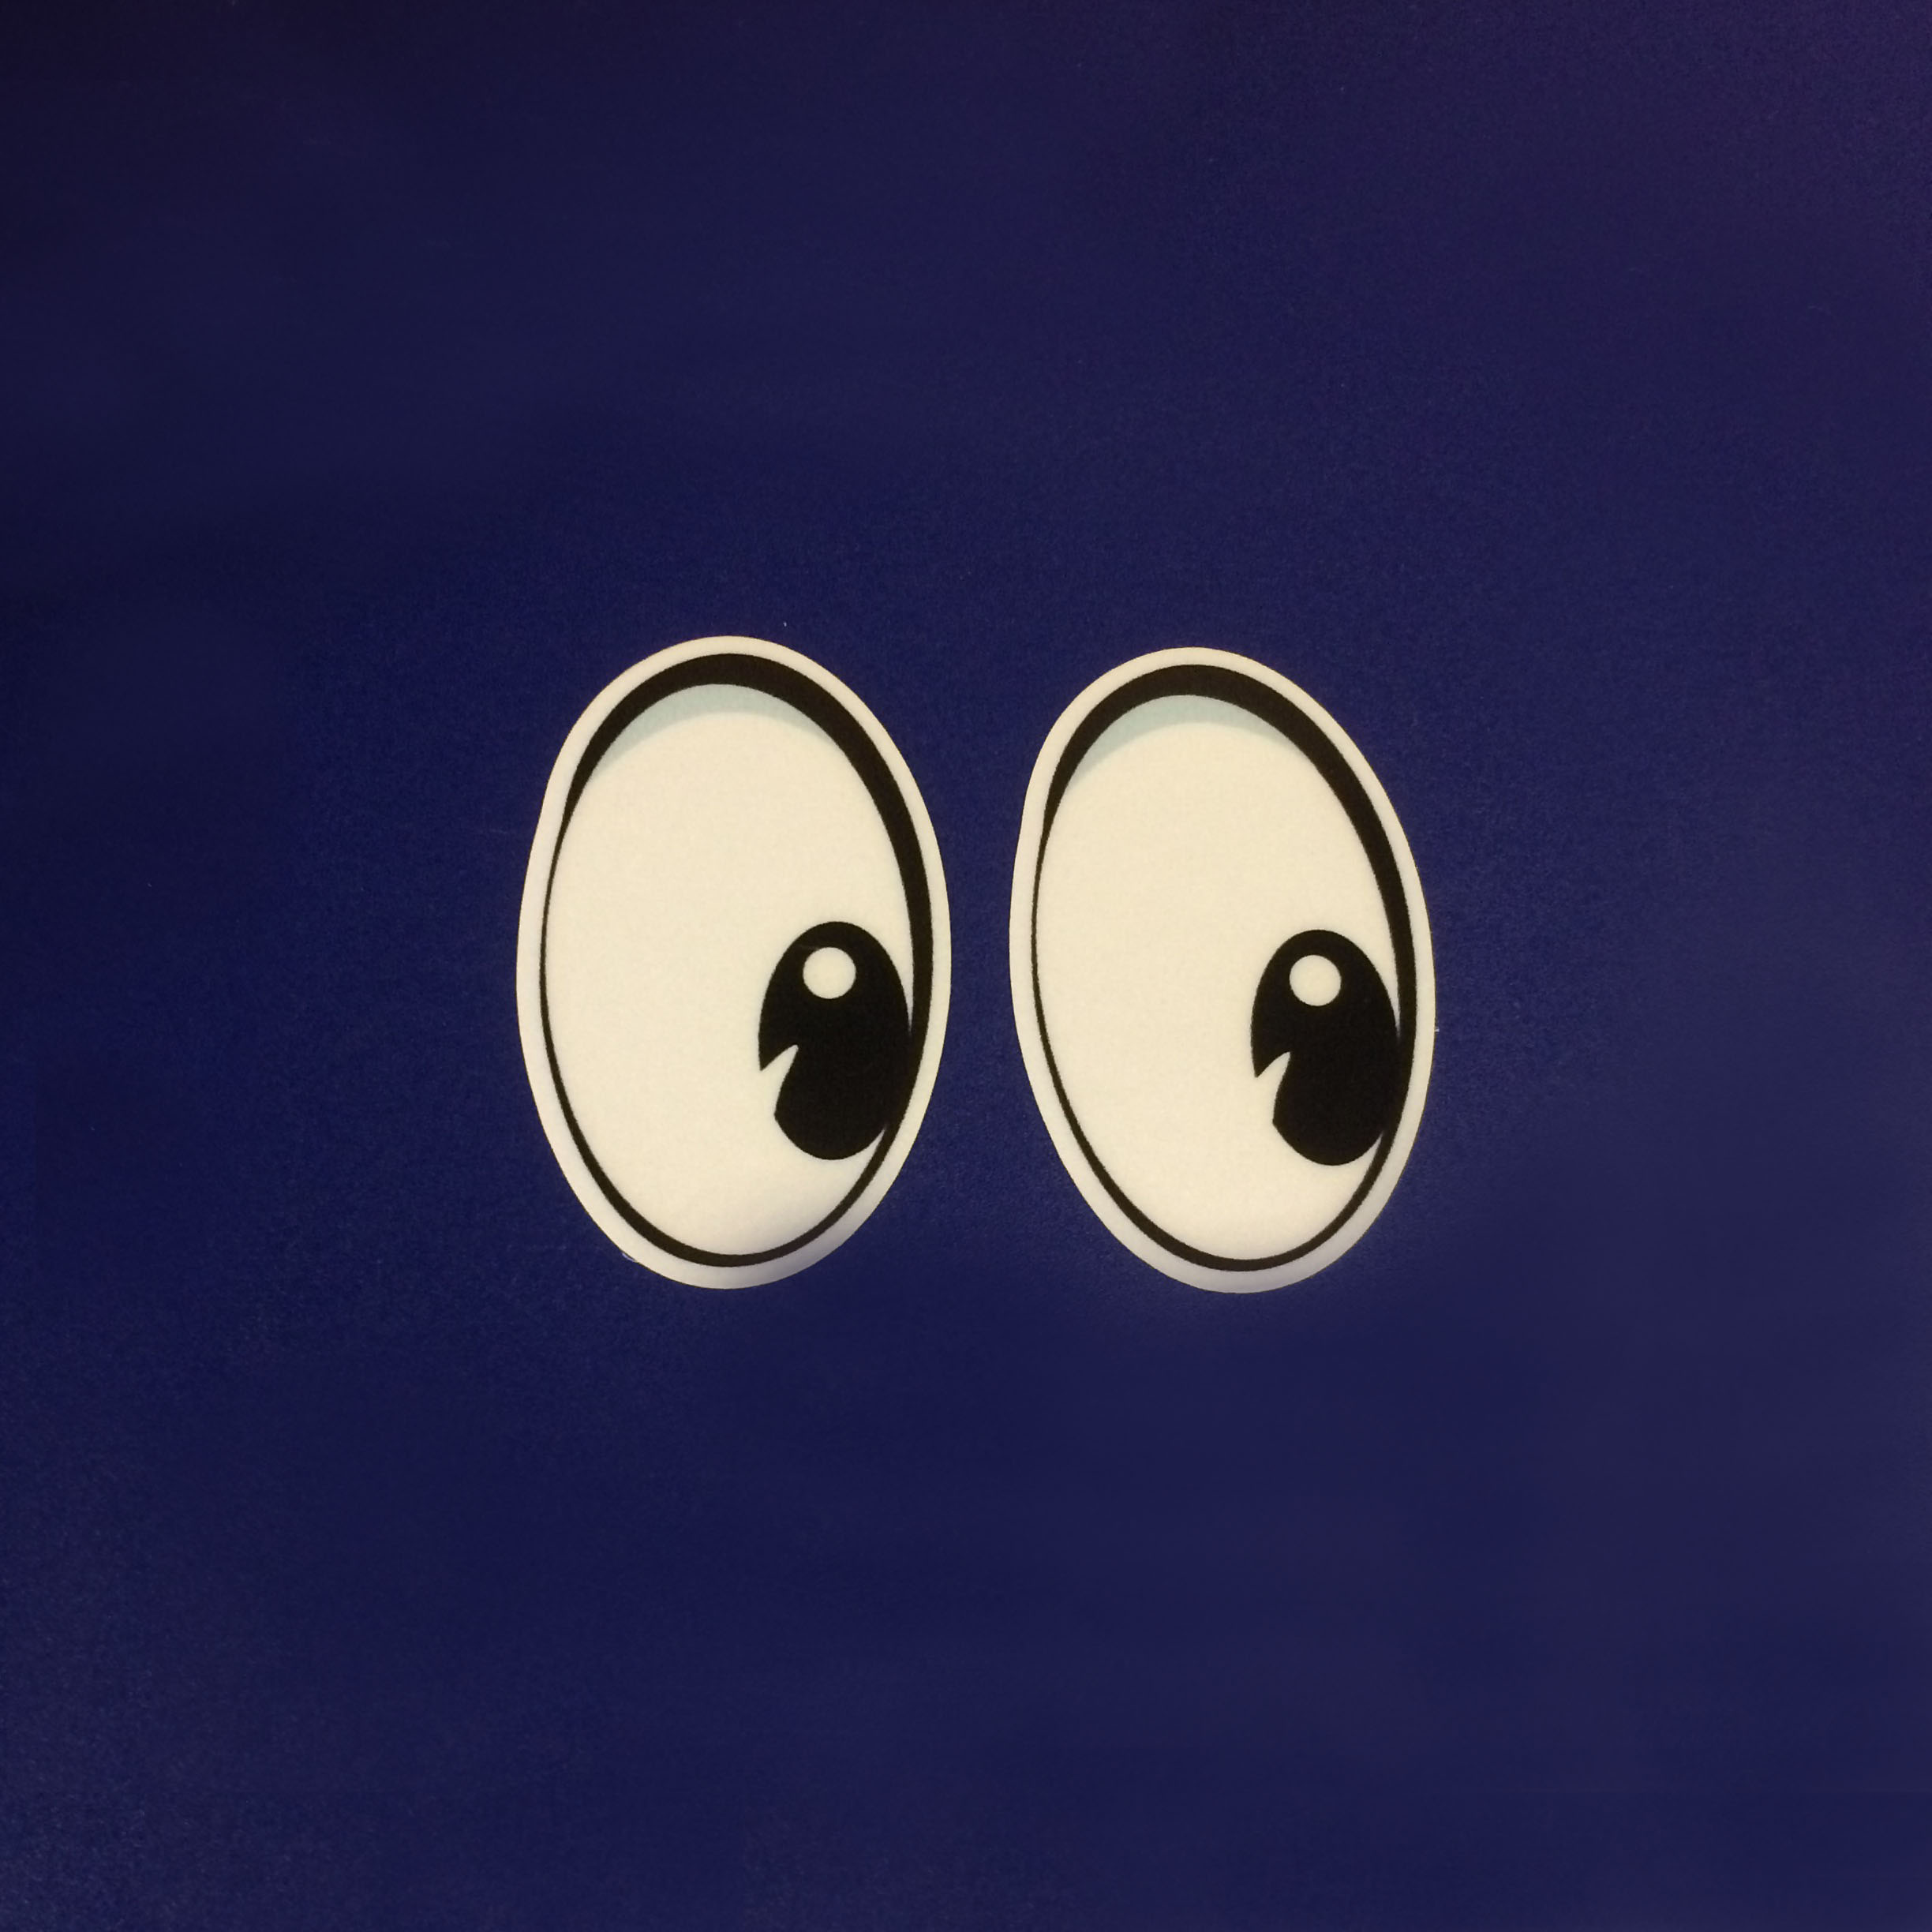 PEEPER EYES REFLECTIVE STICKERS. Reflective eyes with black pupils.